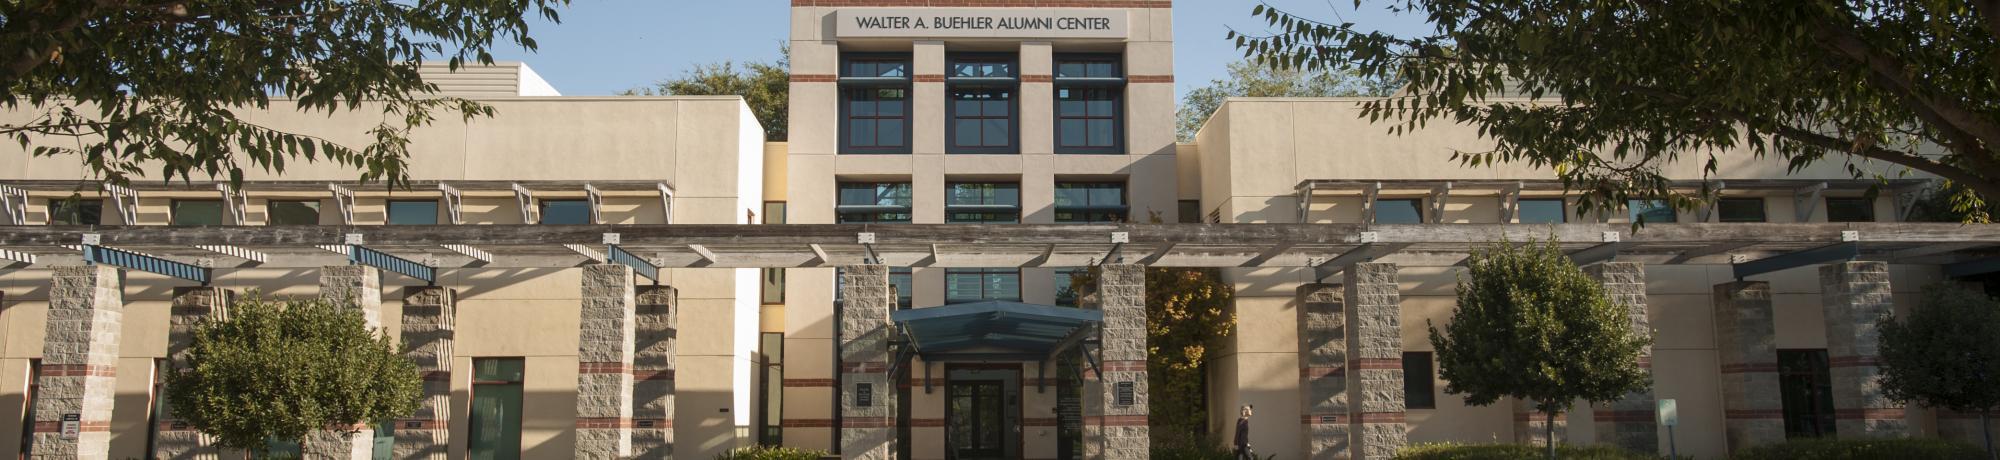 Walter A. Buehler Alumni Center